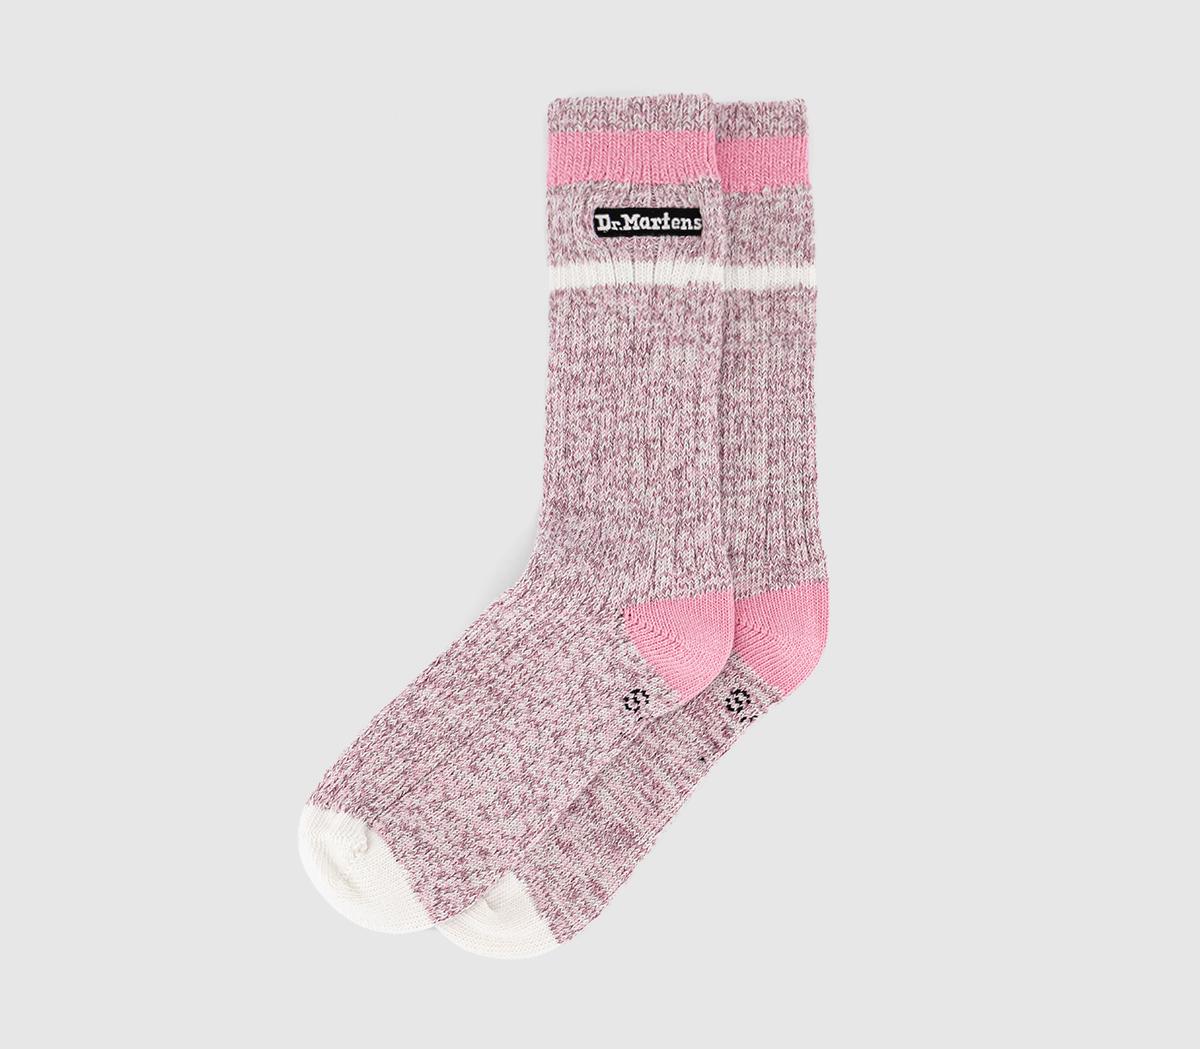 Dr. Martens Marl Socks Cool Grey Pink, M/l